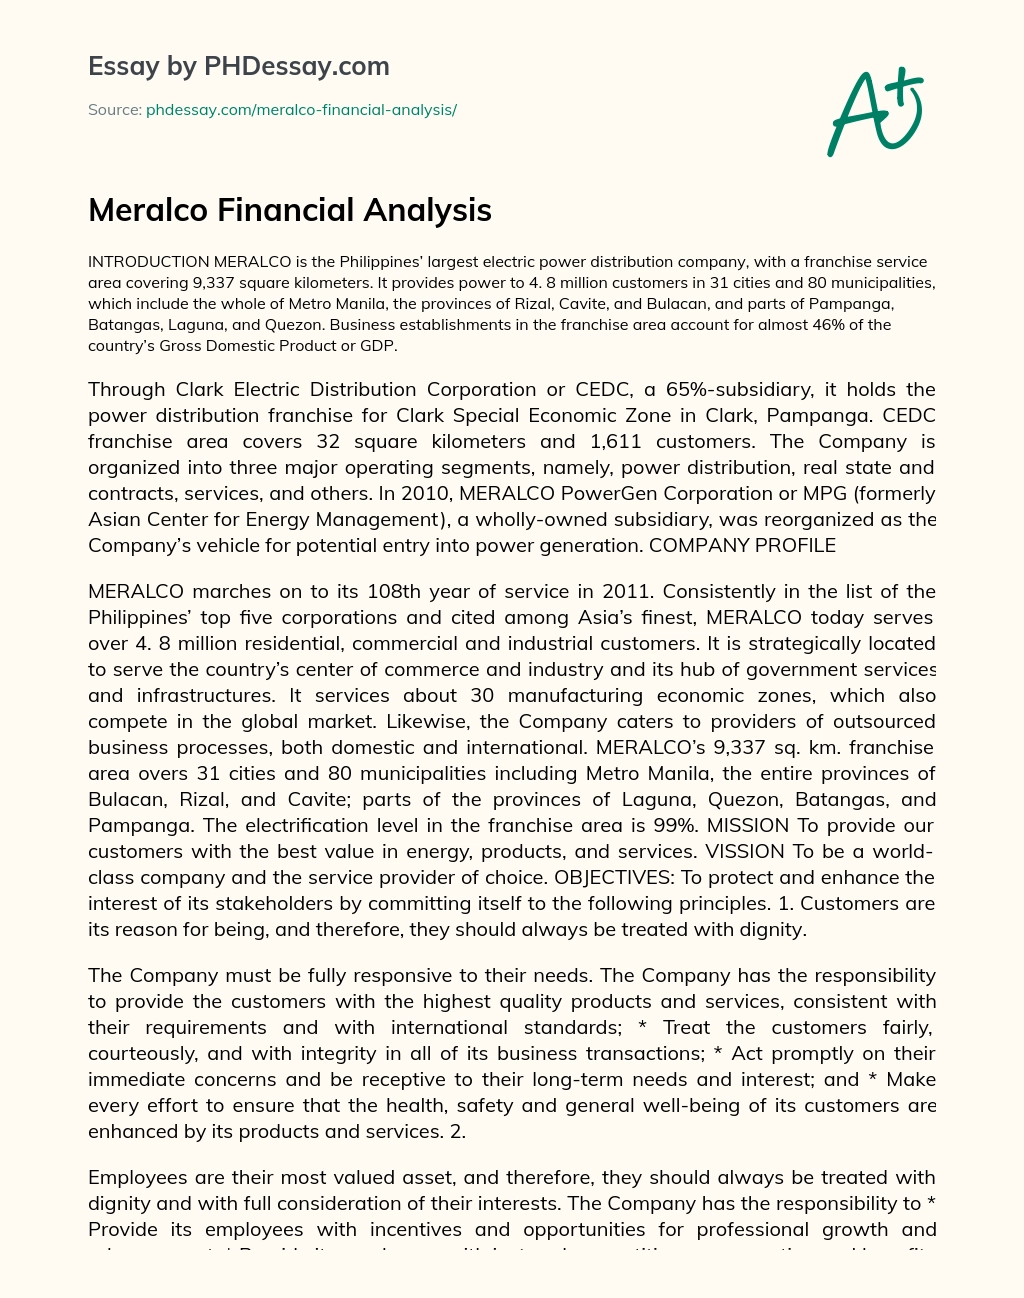 Meralco Financial Analysis essay